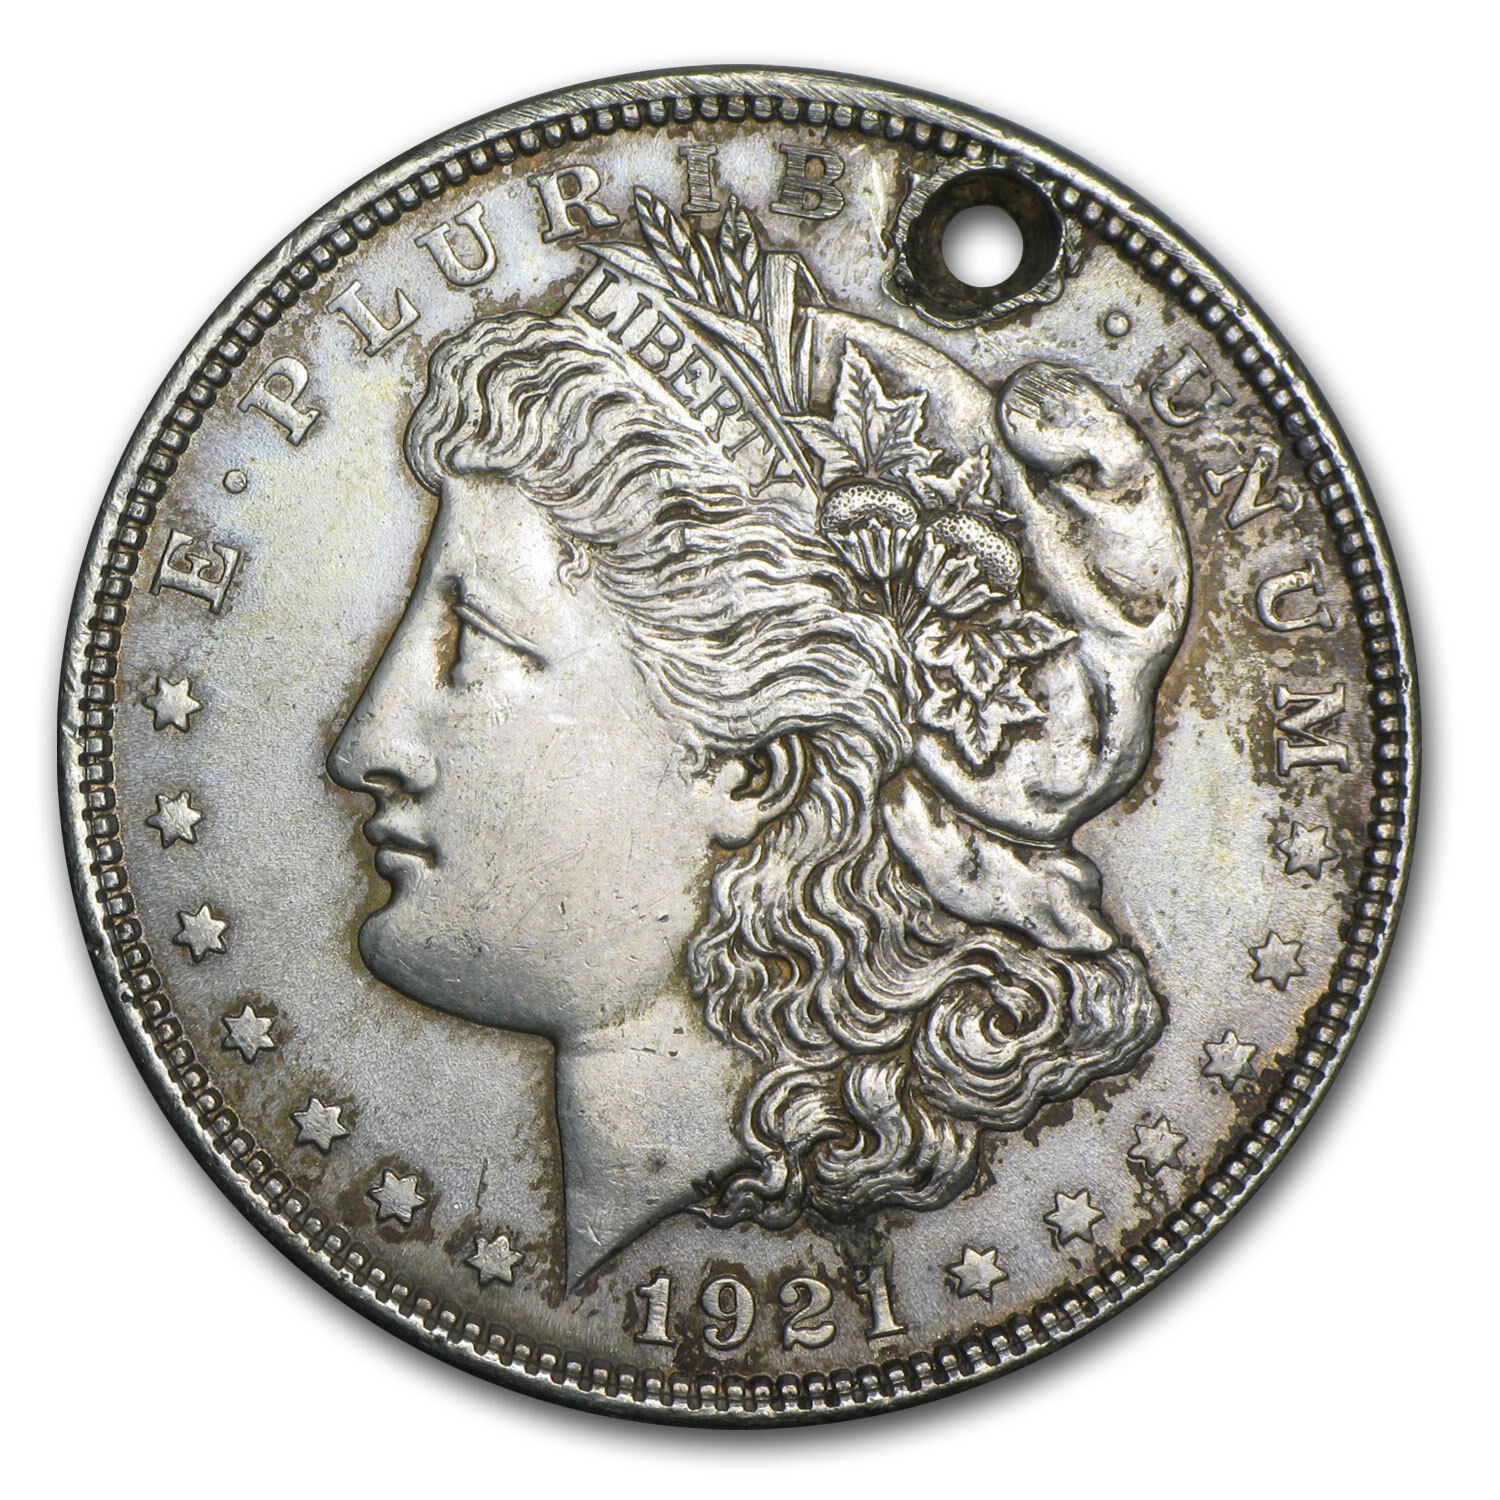 Morgan/Peace Silver Dollar - Worse Than Cull - SKU #8553